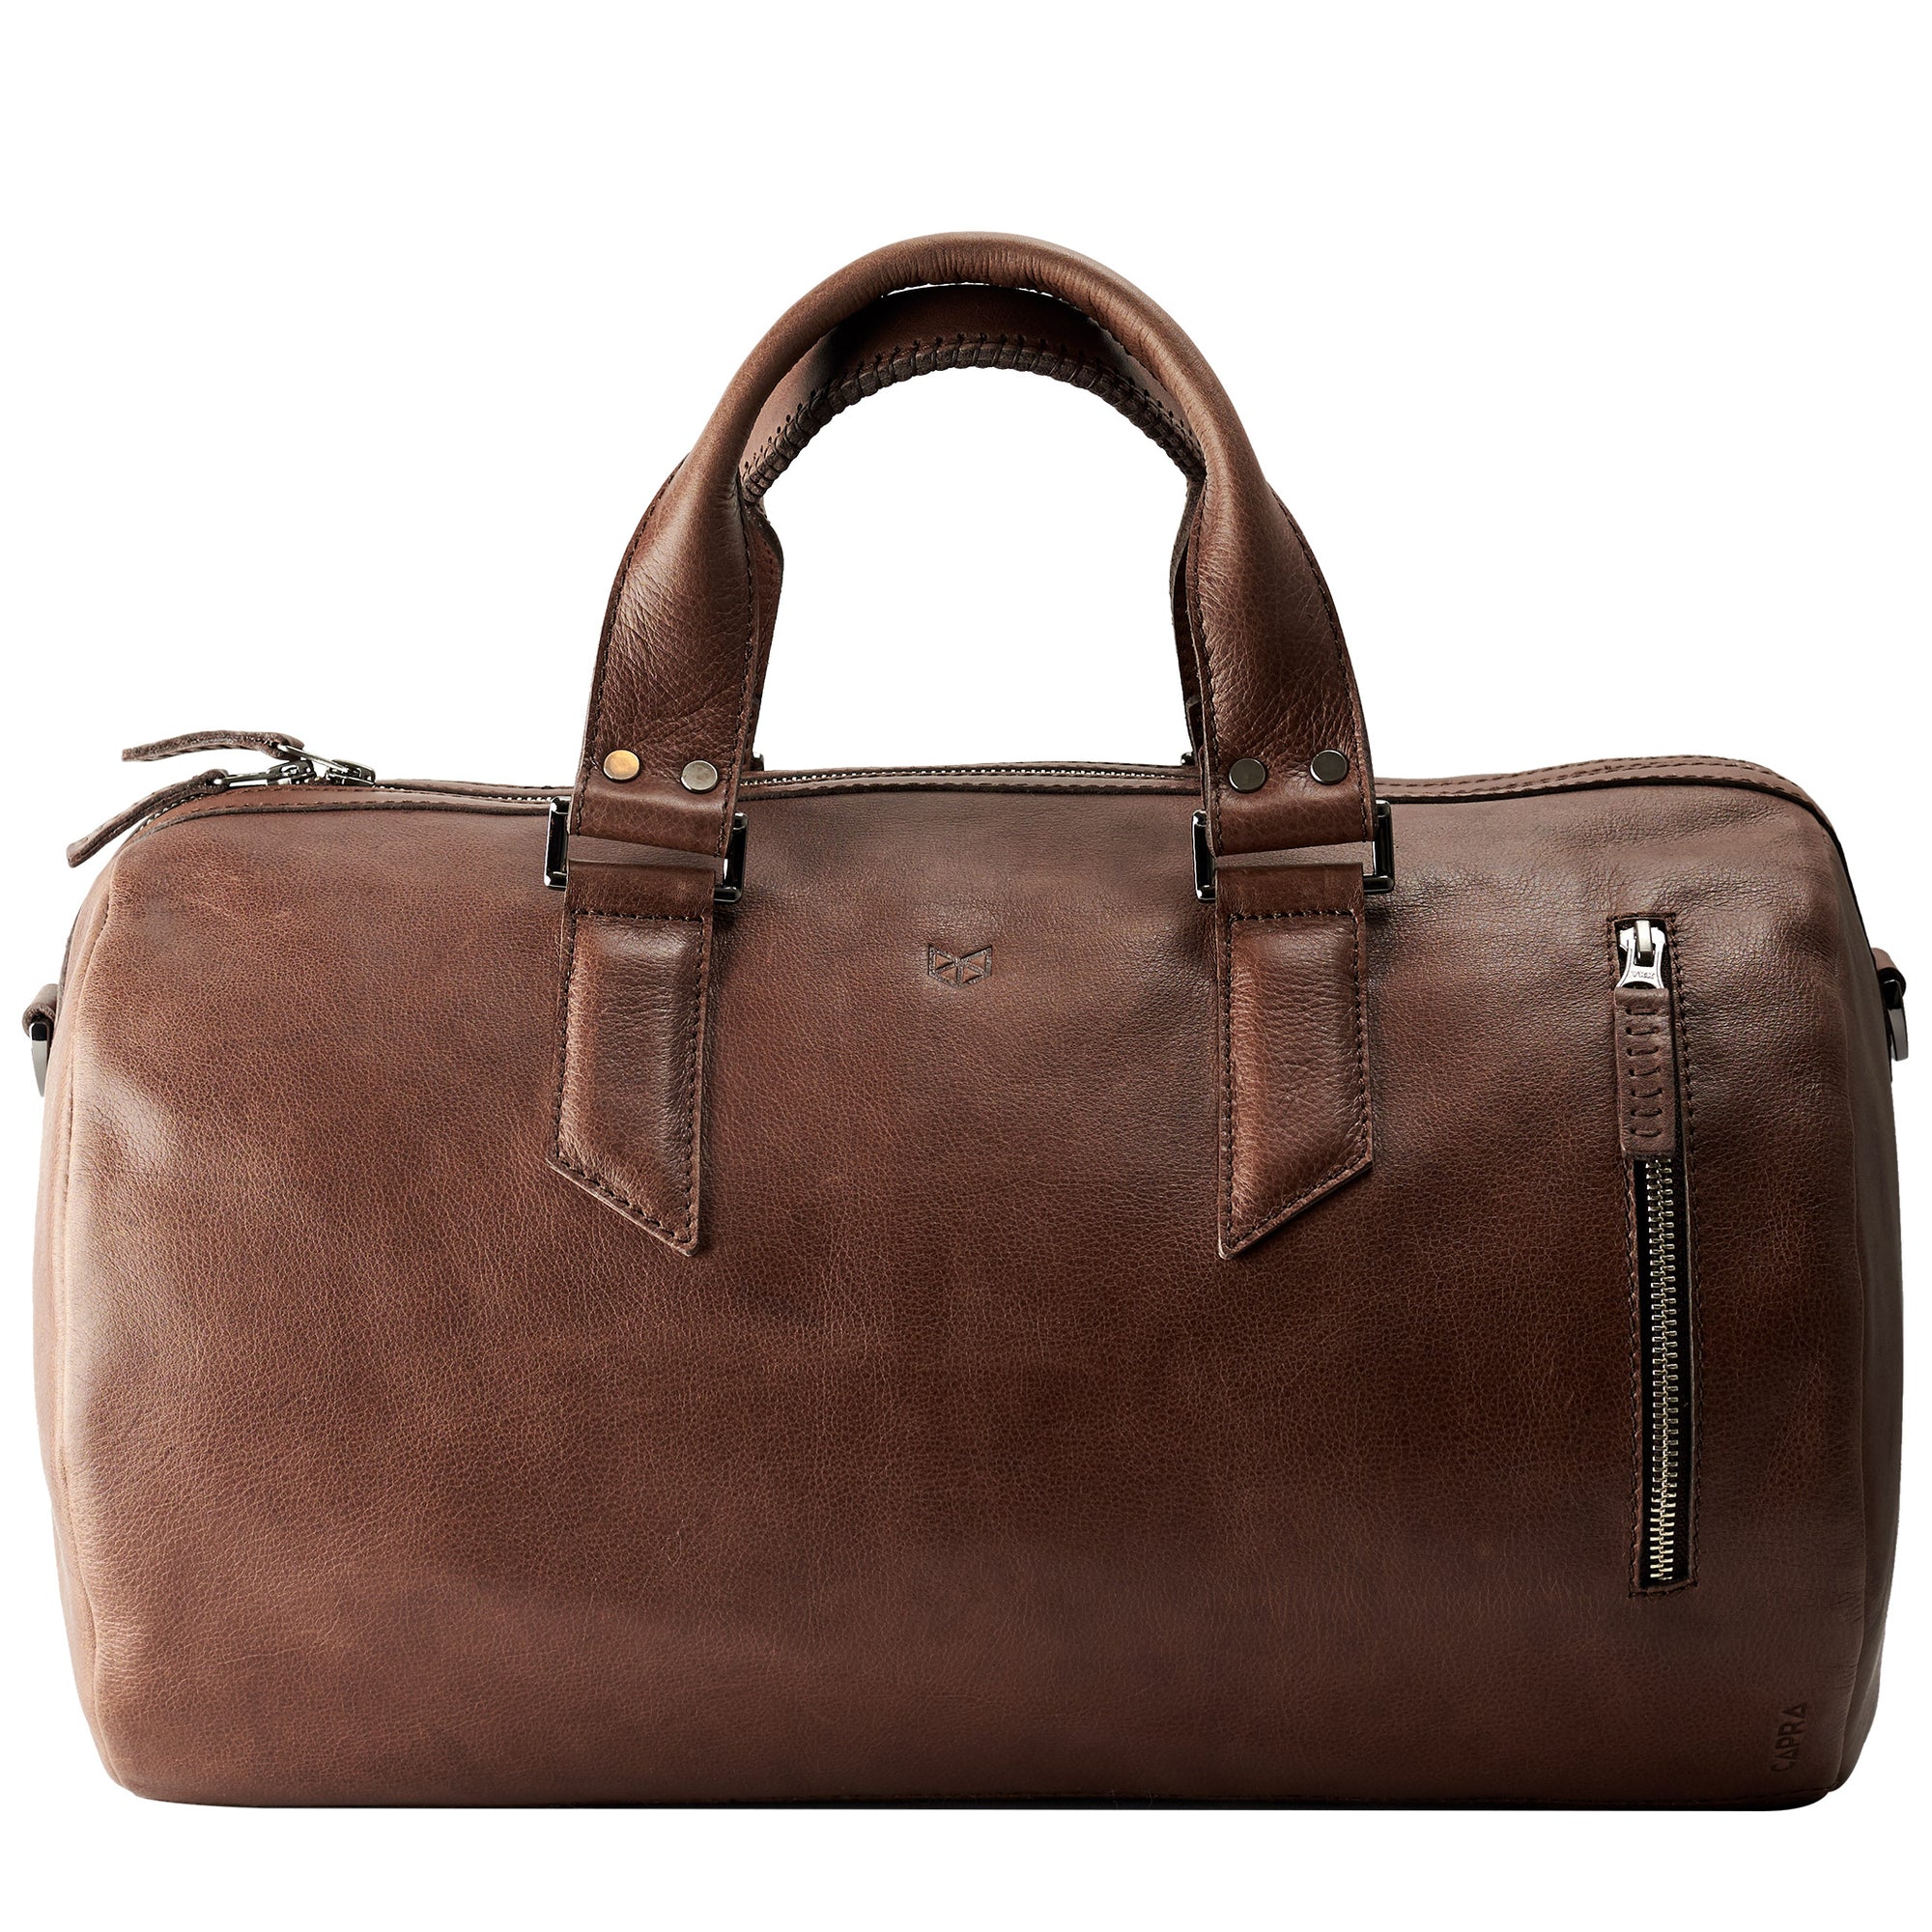 Brown fashion leather duffle bag for men. Handmade designer handbag 